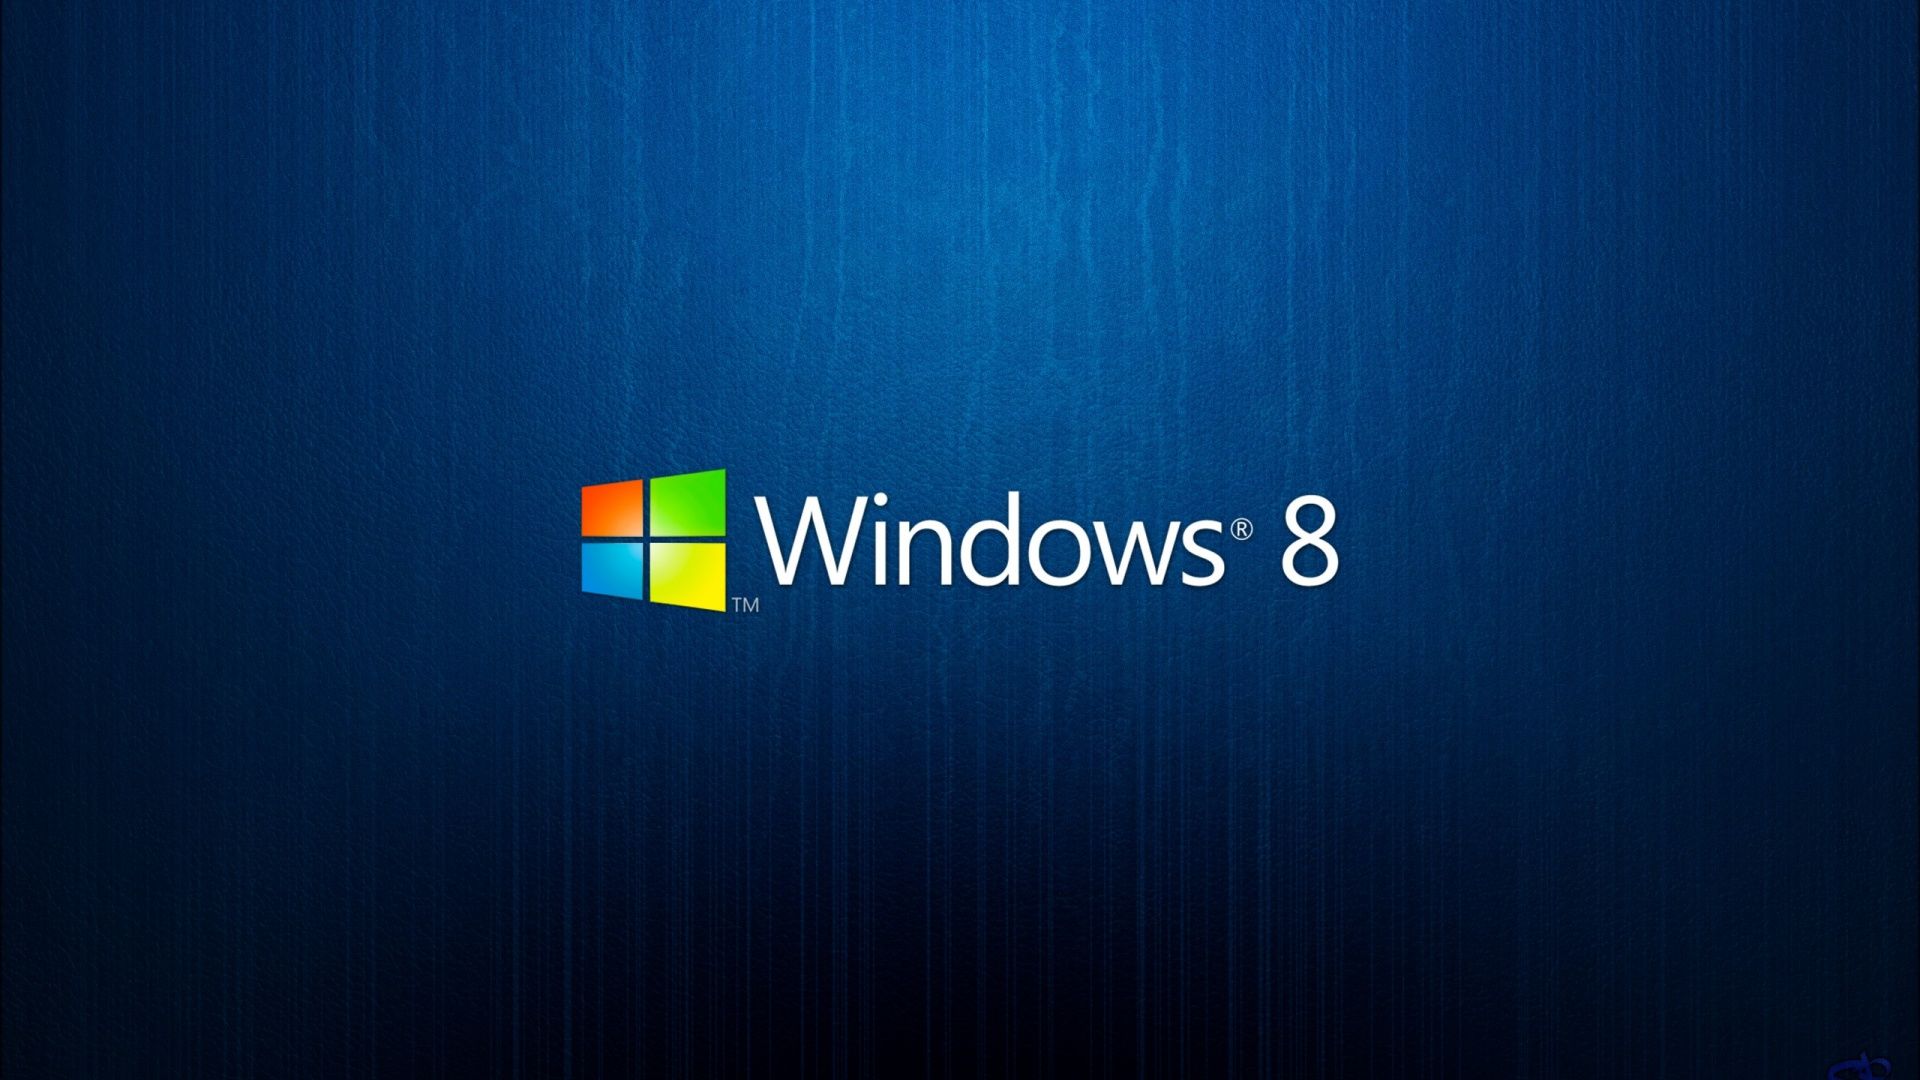 Windows 8 Hd Wallpaper